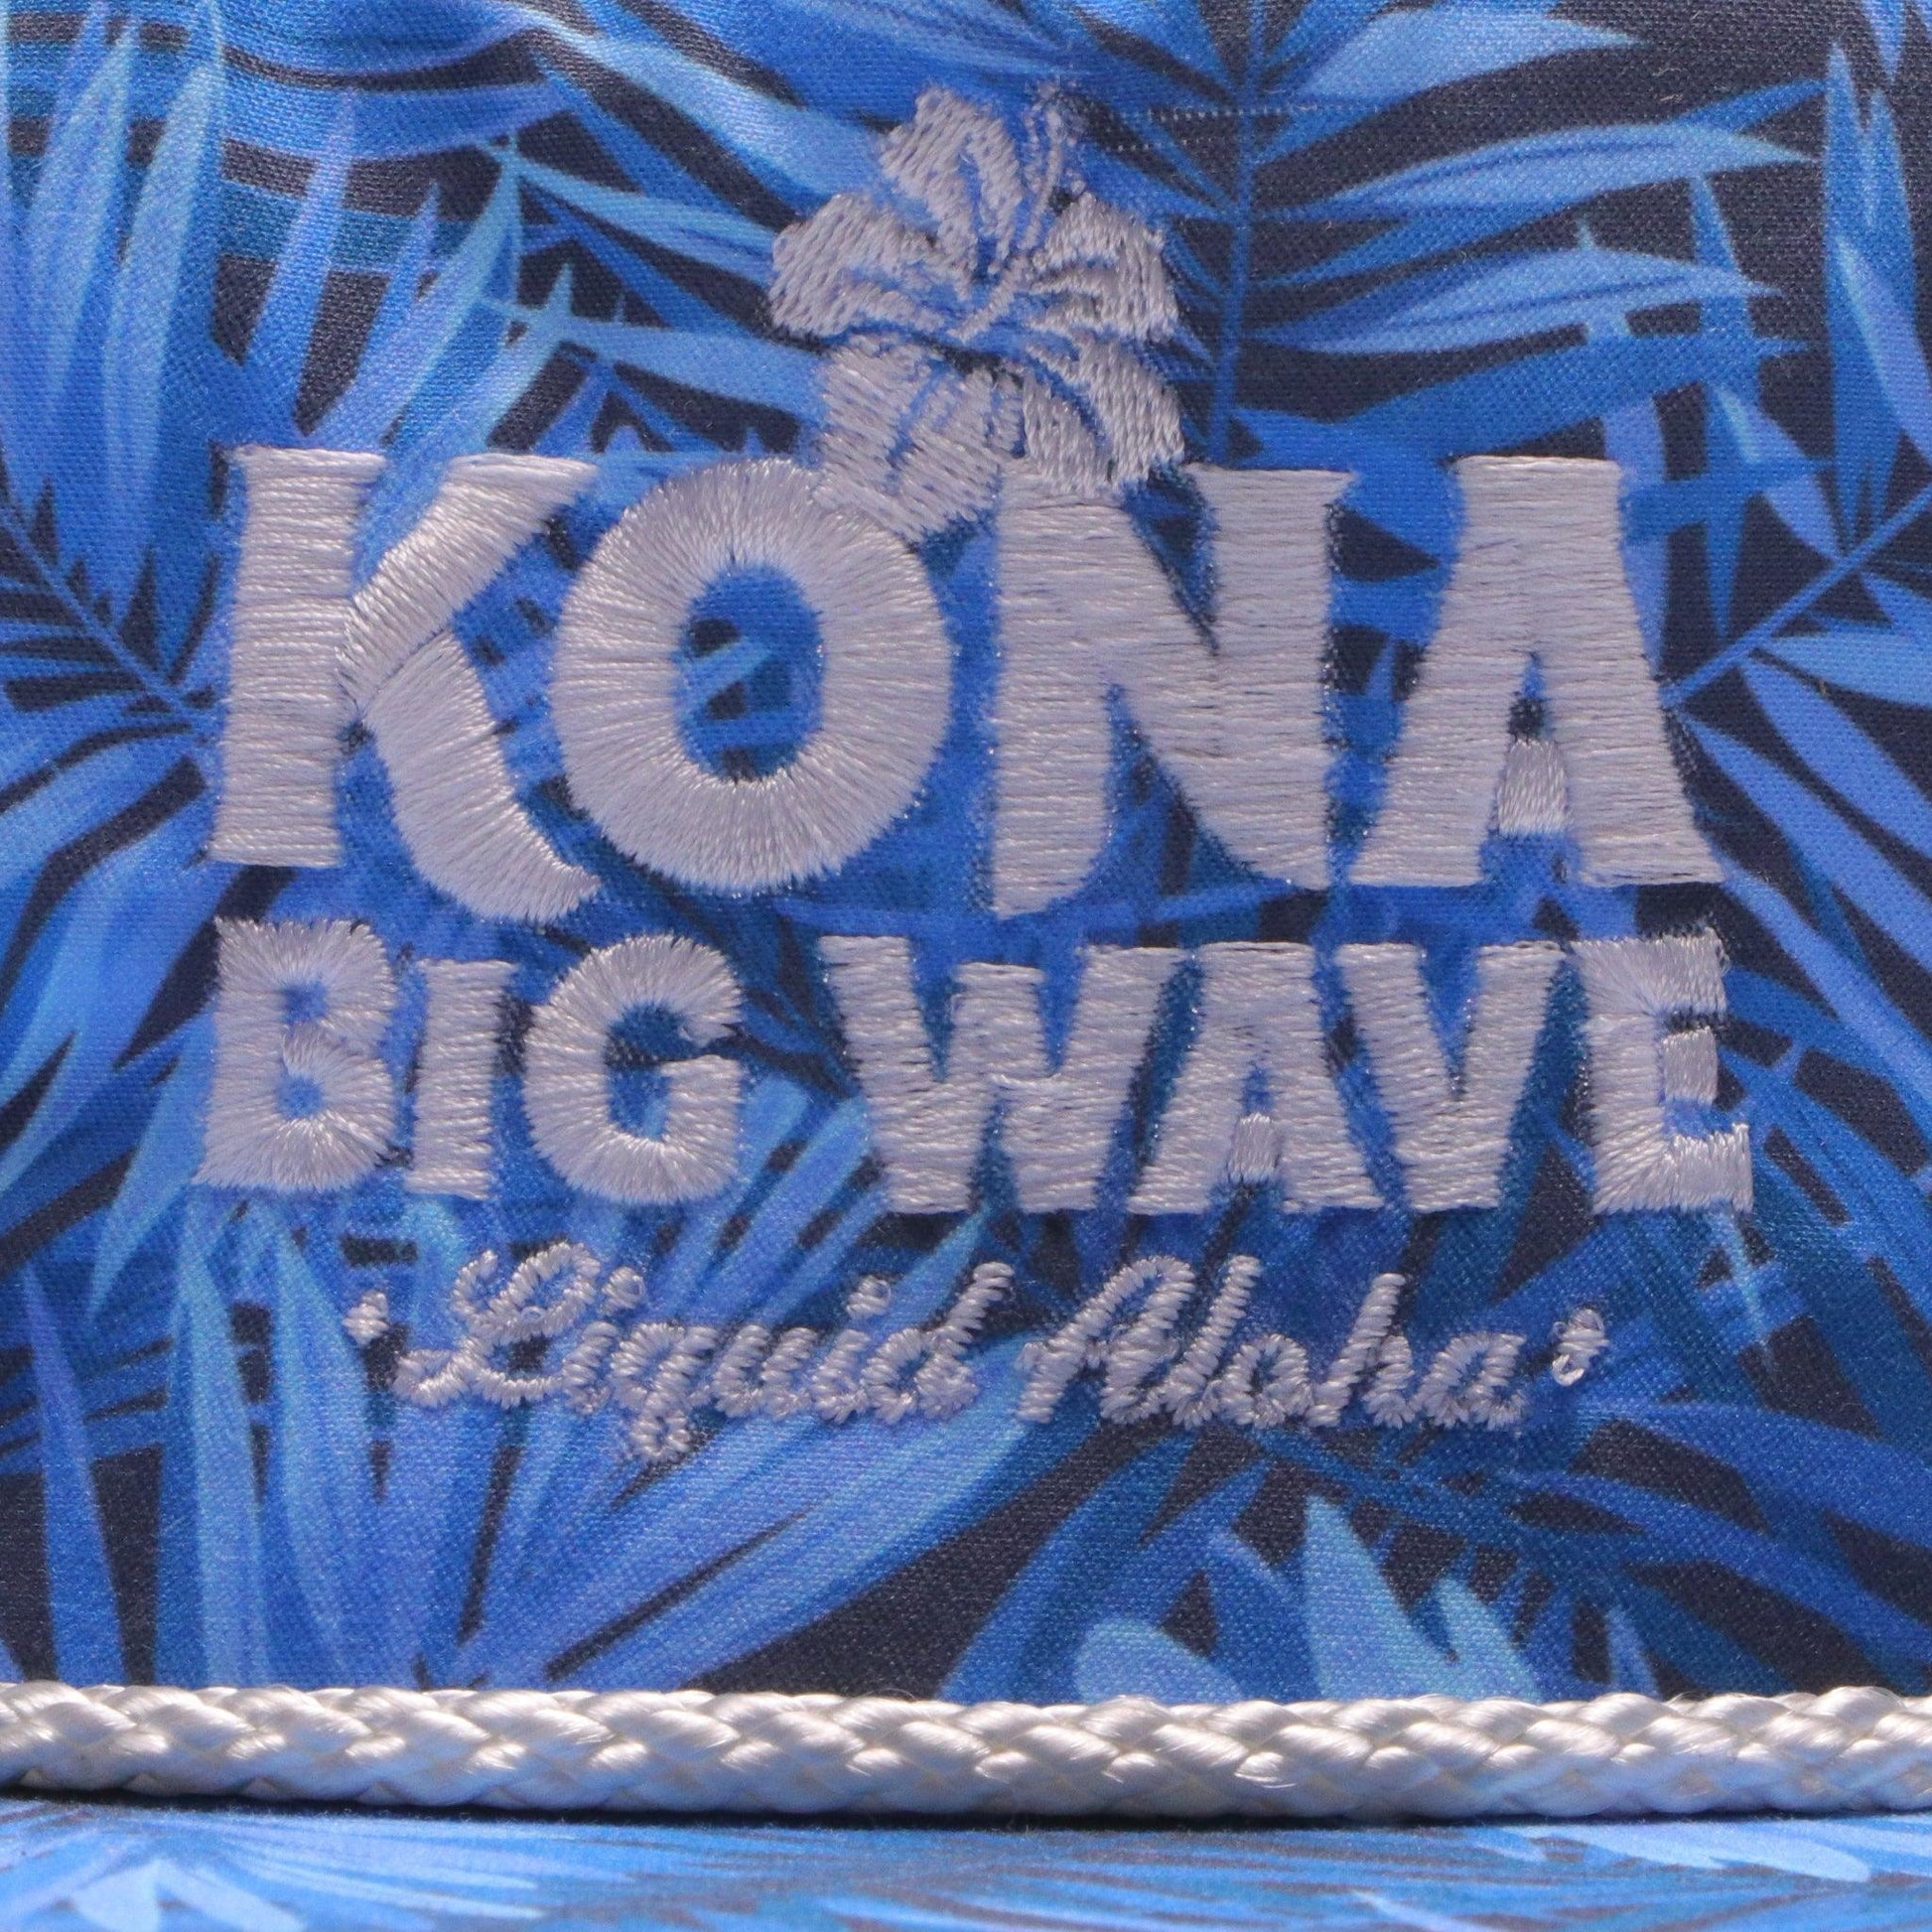 close up of front panel decoration of hat. white embroidered Kona Big Wave Liquid Aloha logo